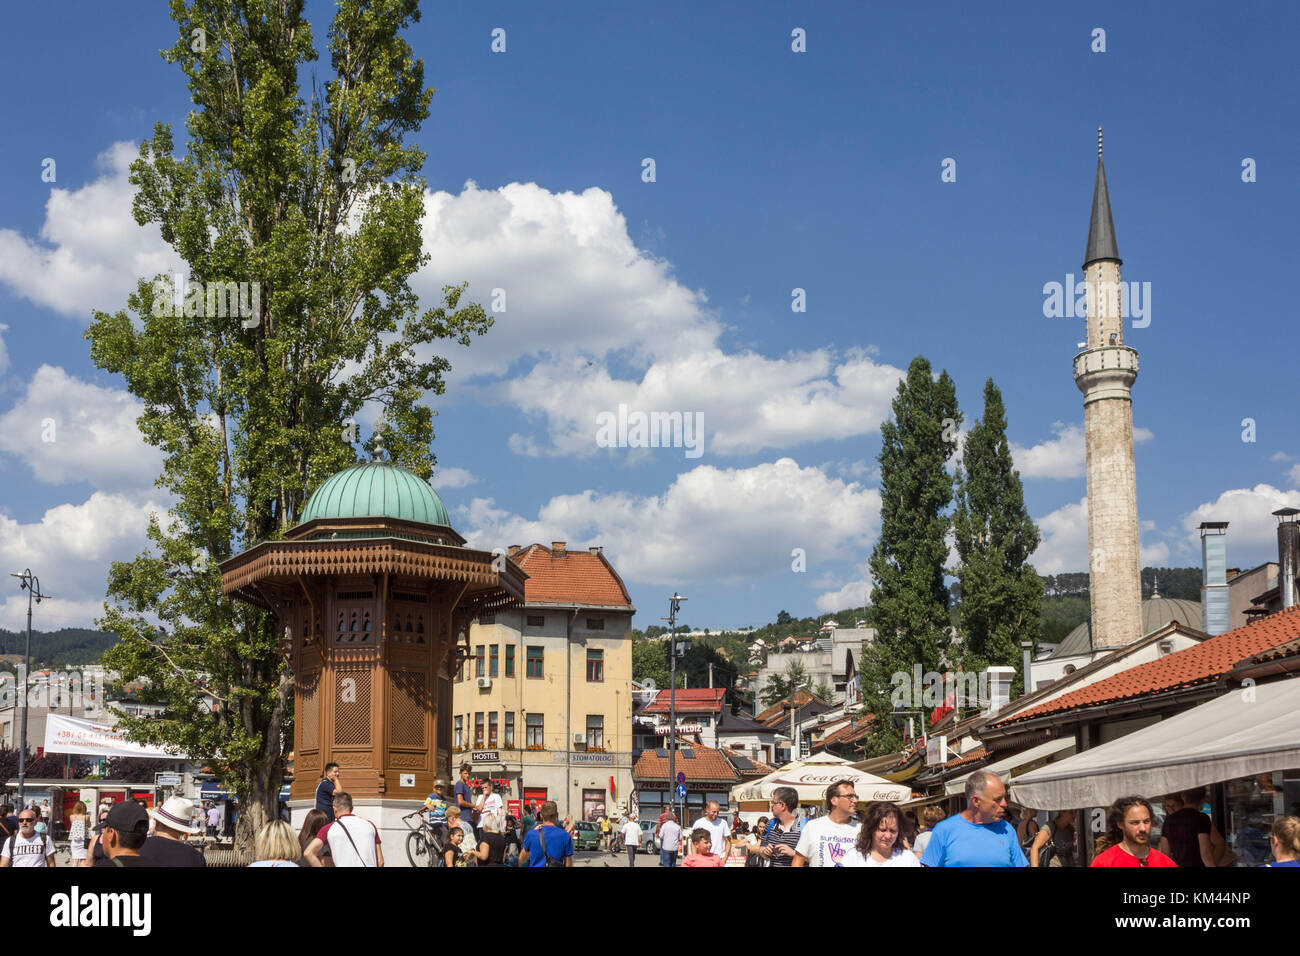 SARAJEVO, BOSNIA AND HERZEGOVINA - AUGUST 18 2017: Sarajevo city centre at day time in summer season, with the sebilj fountain and people around Stock Photo